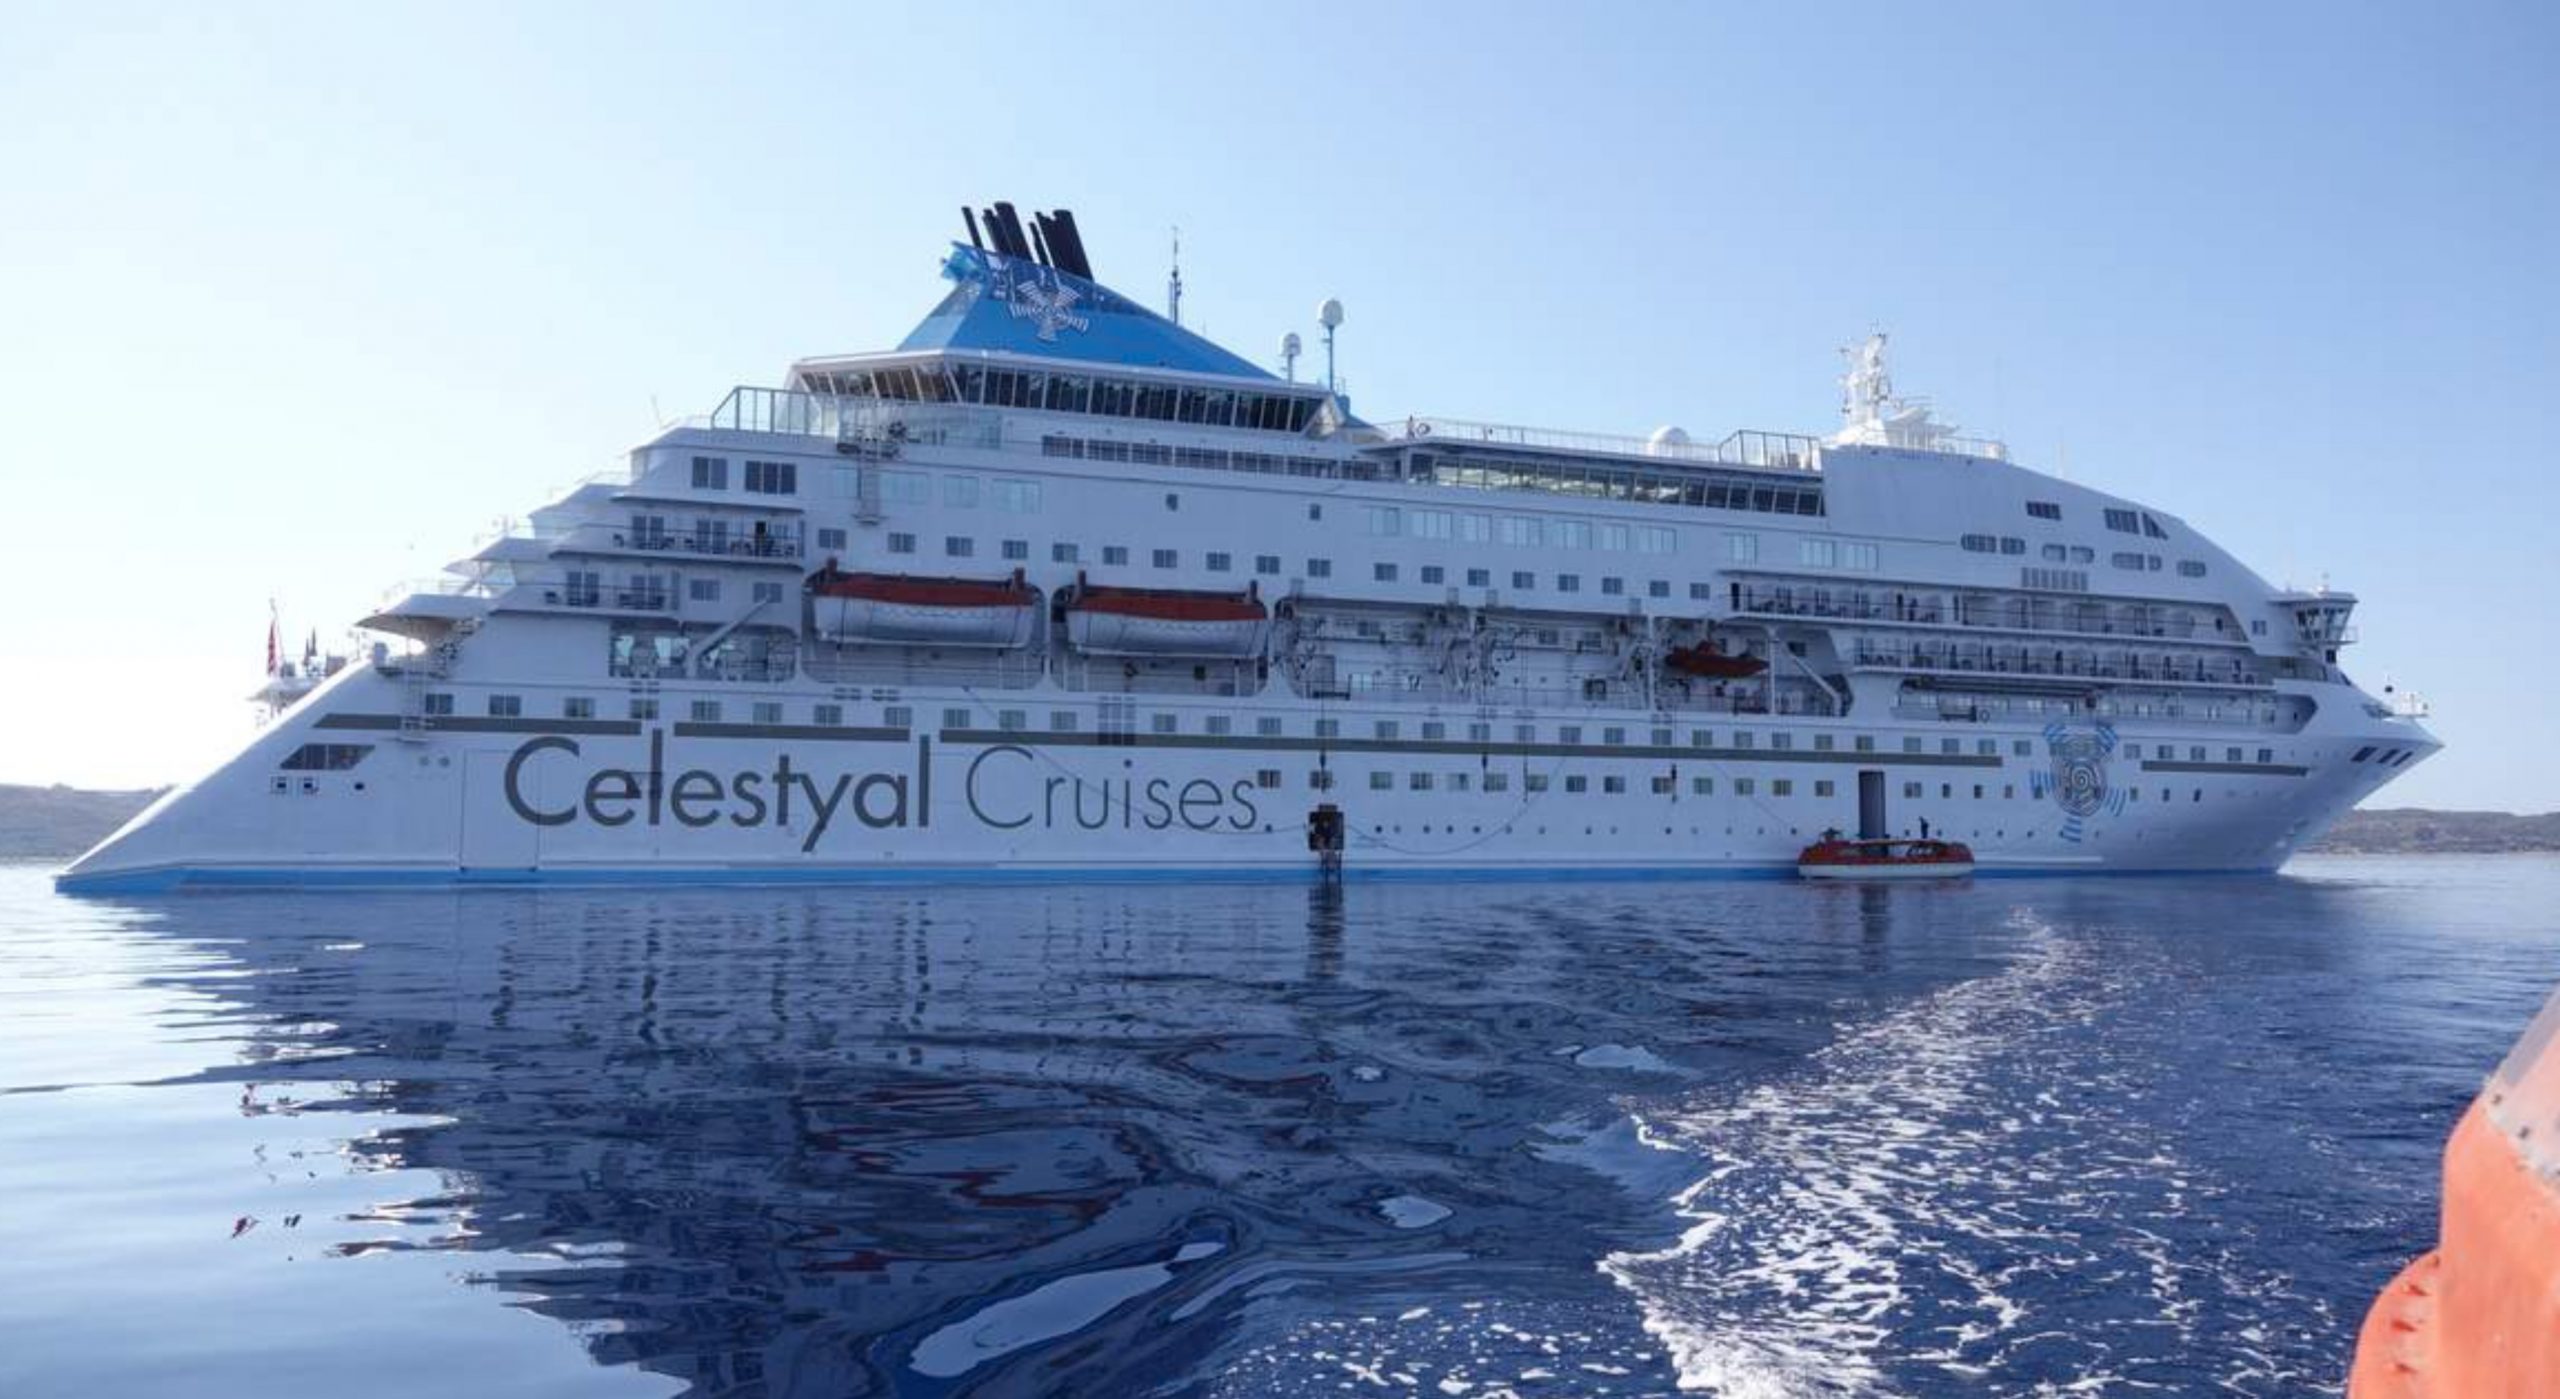 Enjoy Celestyal Cruises in the Mediterranean